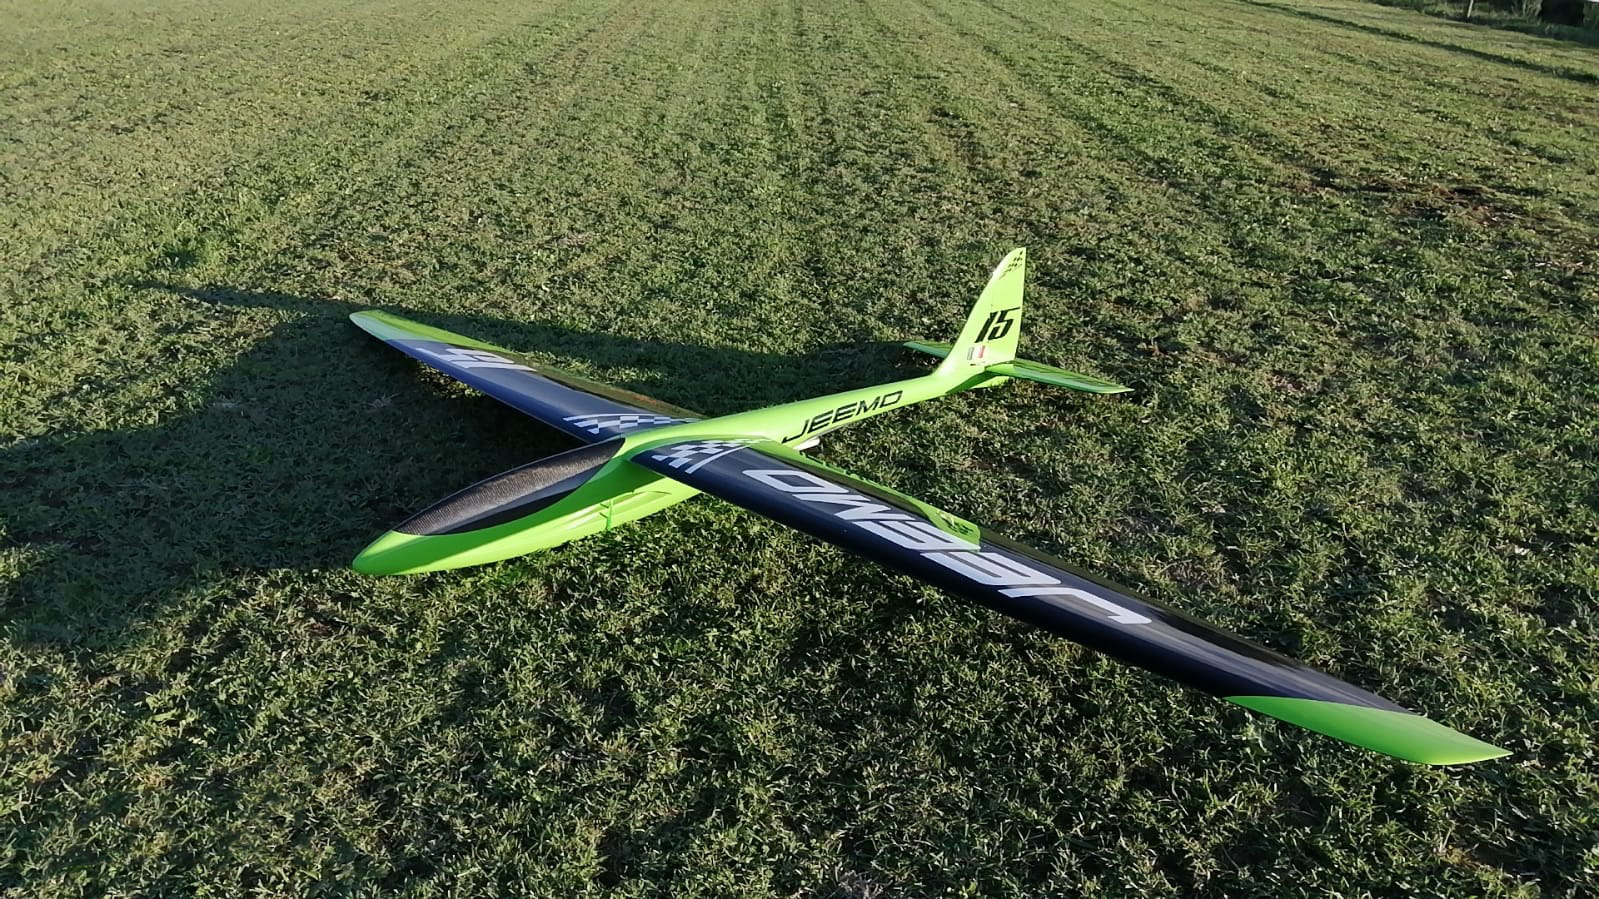 Diana 3 glider